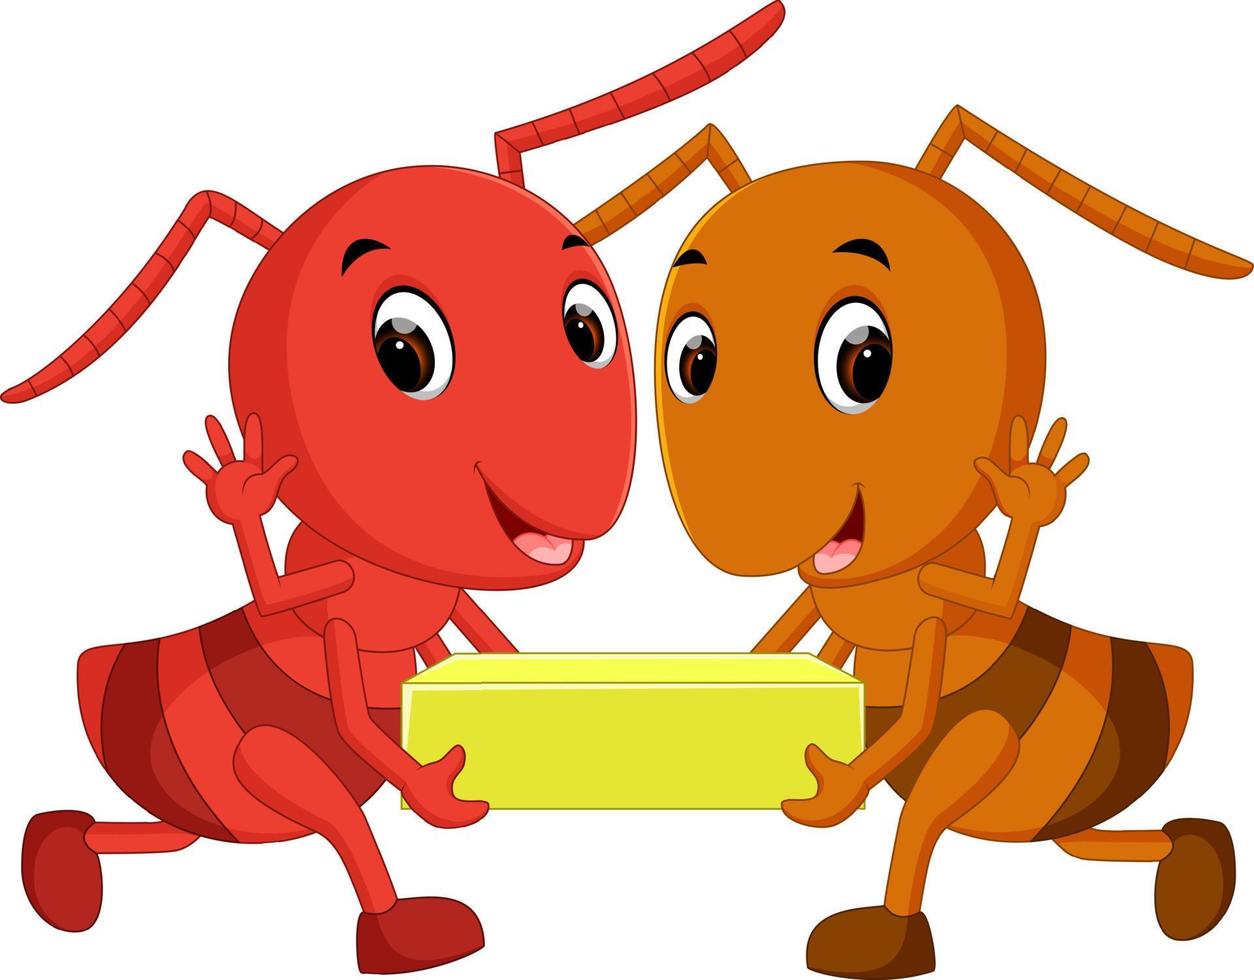 Cartoon ants holding cheese slice vector